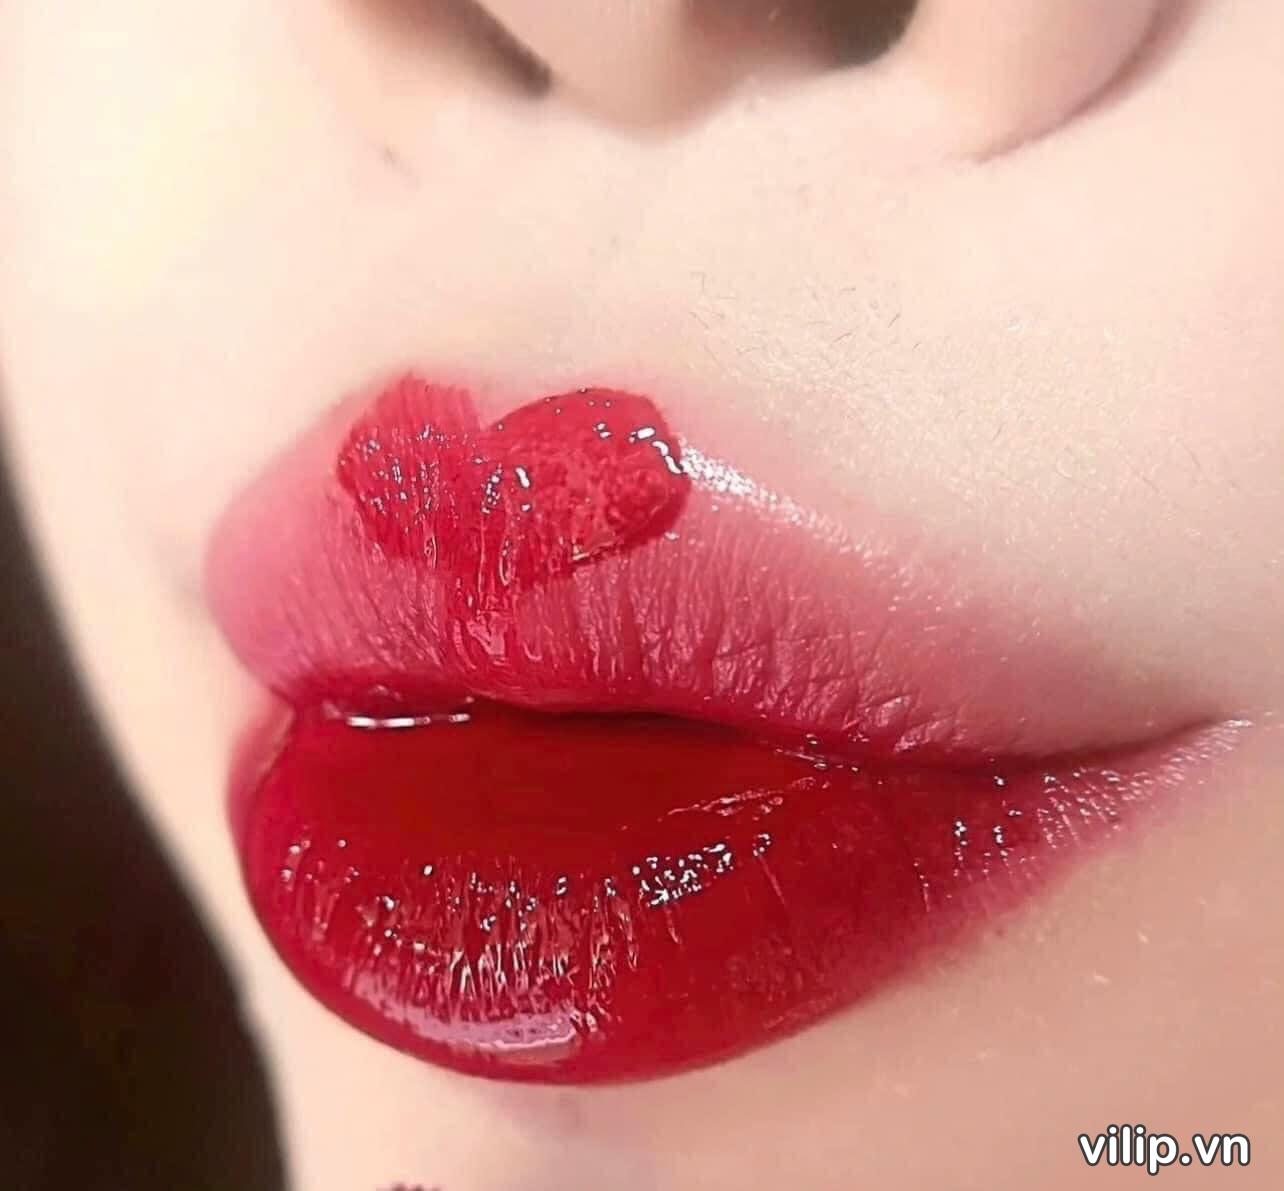 FrenchFriday  new Dior Lip Tattoo review  Lip tattoos Lips Lip tatto